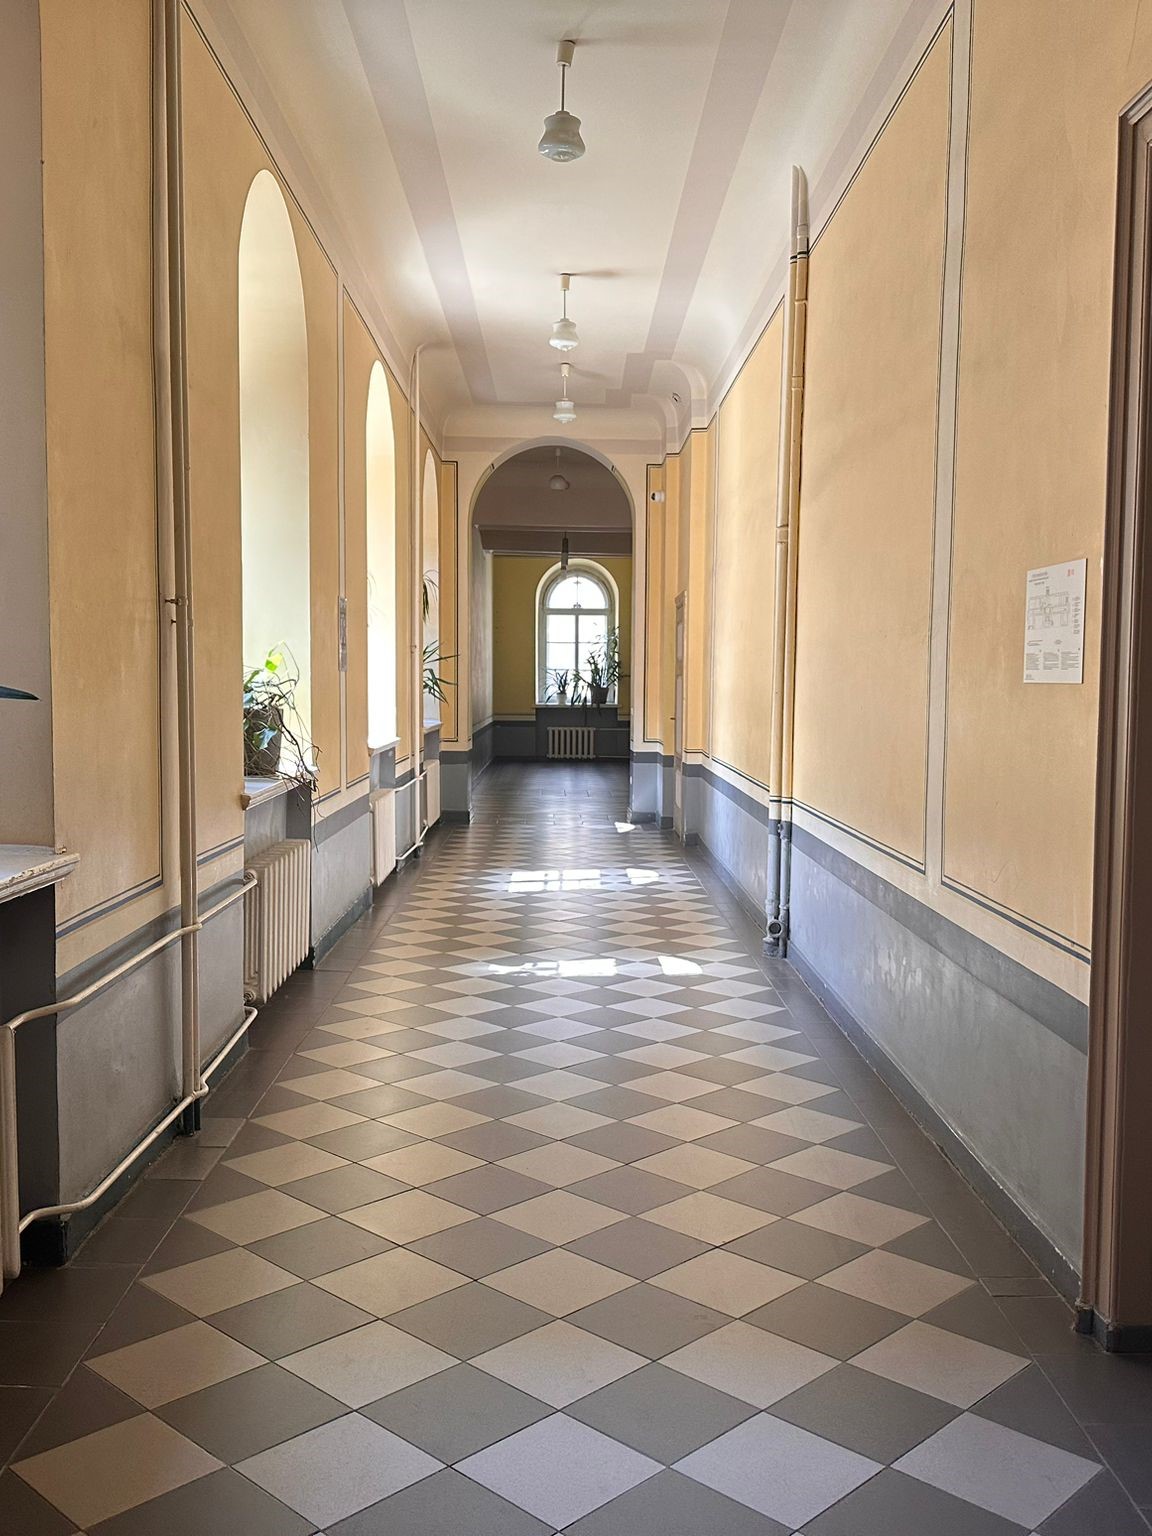 View of the long hallways inside University of Latvia in Riga, Latvia